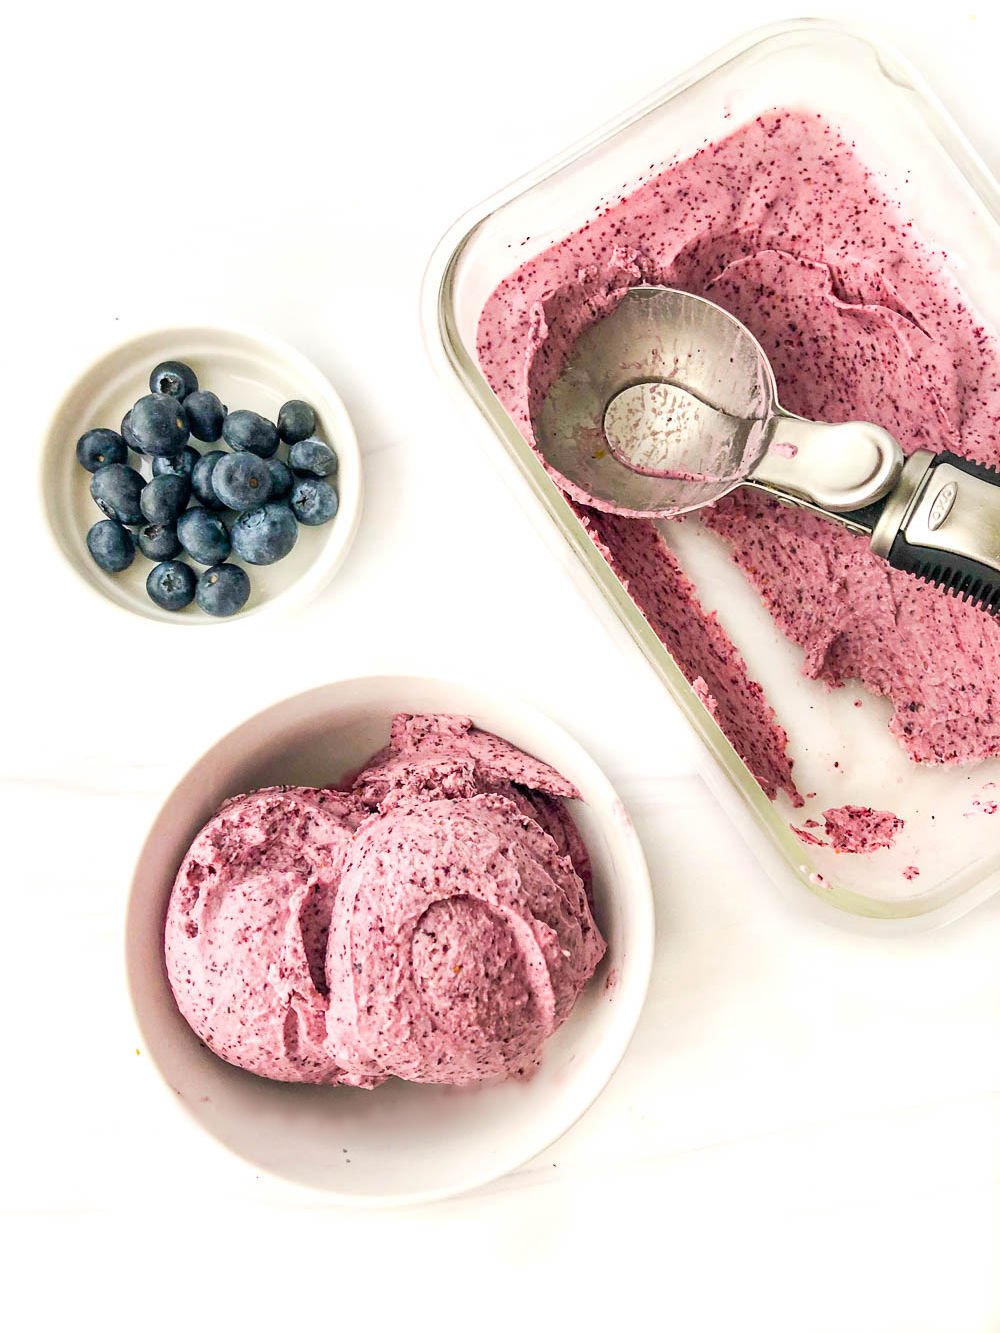 Keto Blueberry Ice Cream made in Blender - sugar free, 3 ingredients!